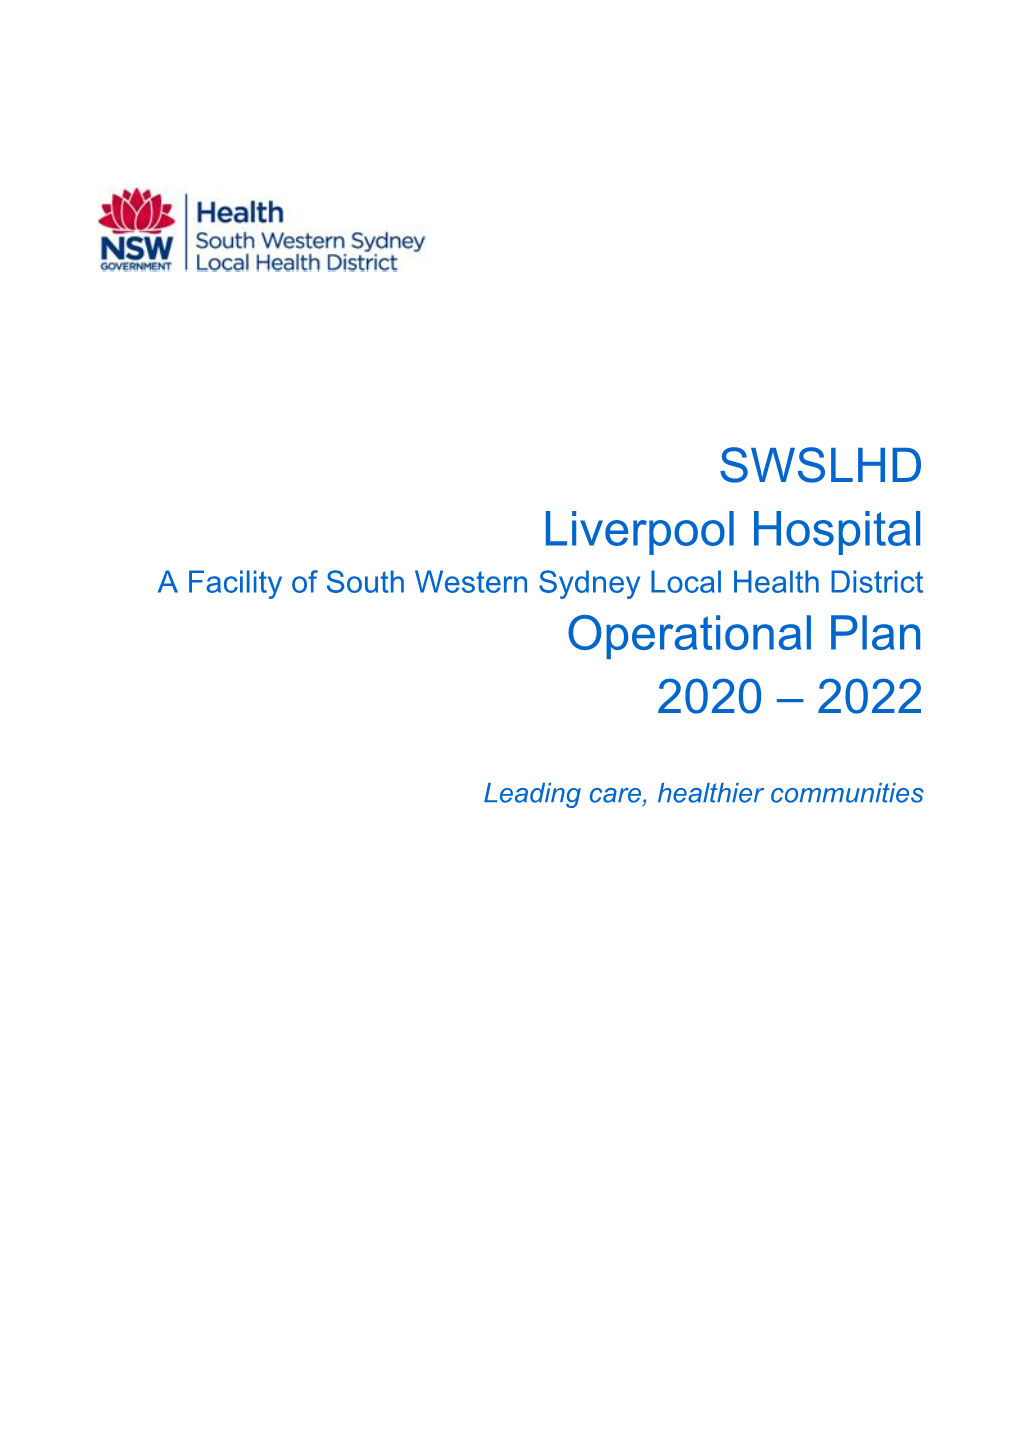 SWSLHD Liverpool Hospital Operational Plan 2020 – 2022